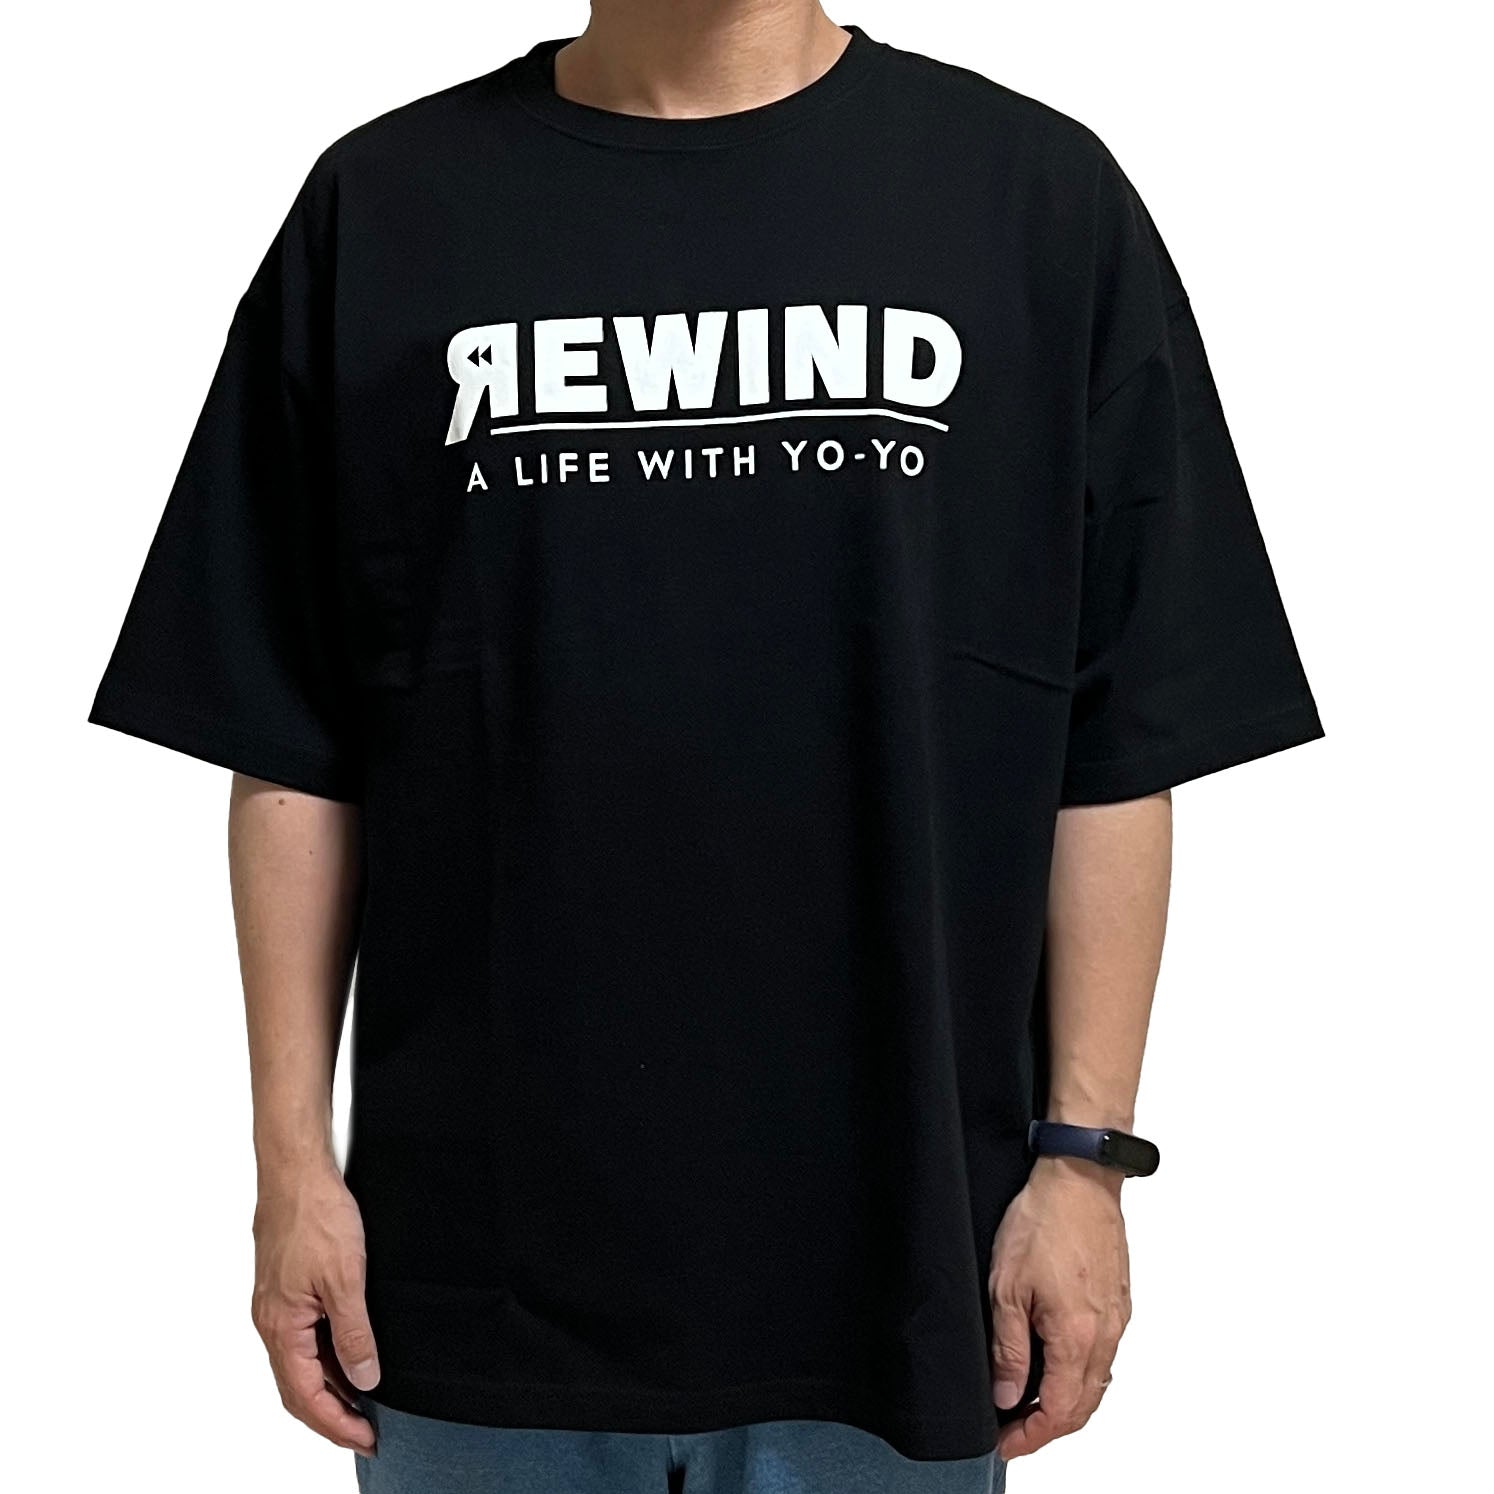 REWIND Loose Fitting Silhouette T-shirt (Black / White Logo) - YOYO STORE REWIND WORLDWIDE